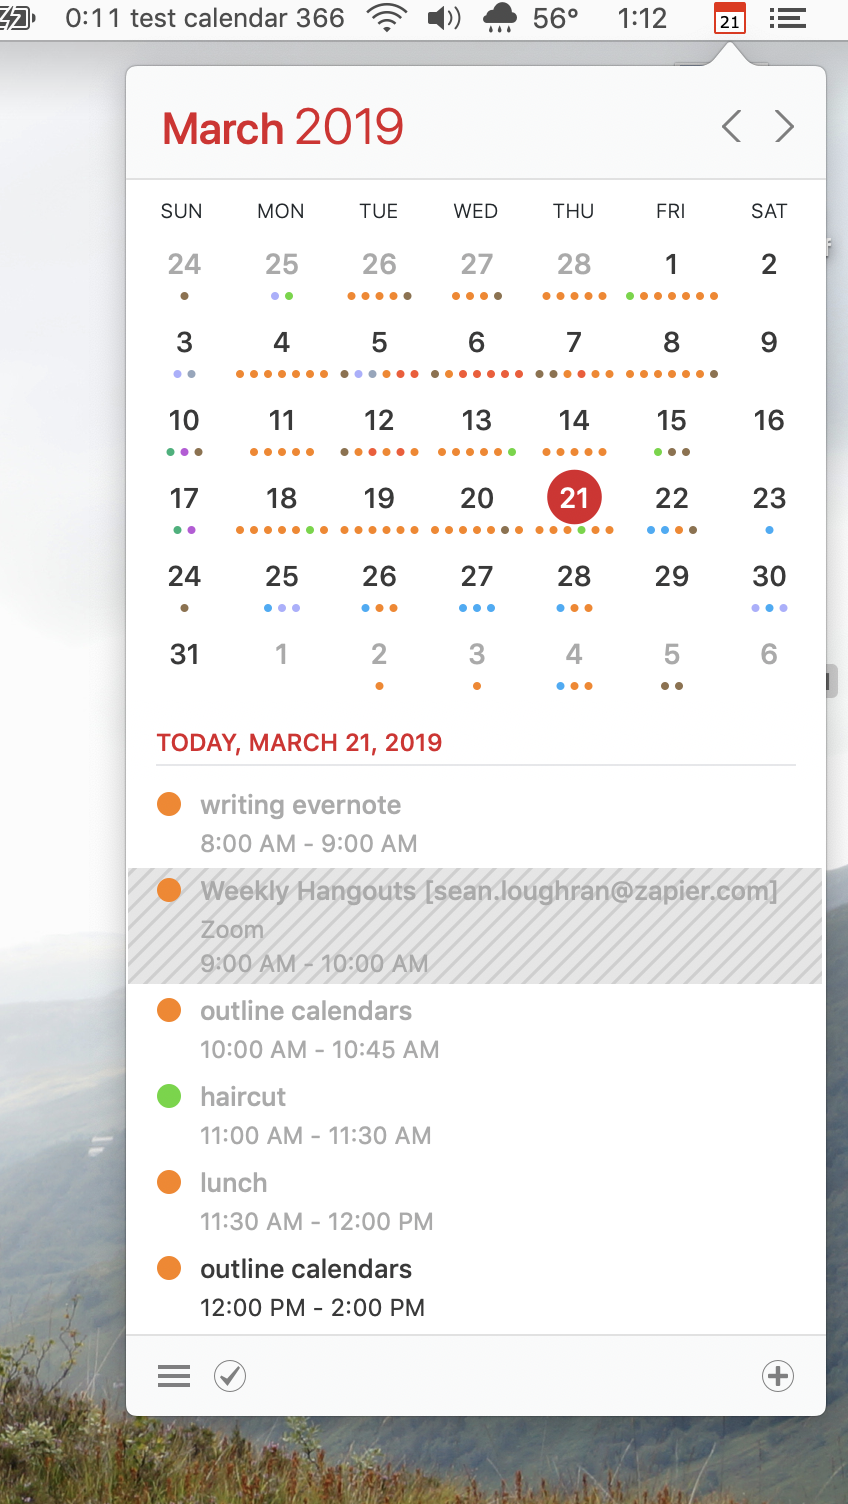 Macbook calendar app